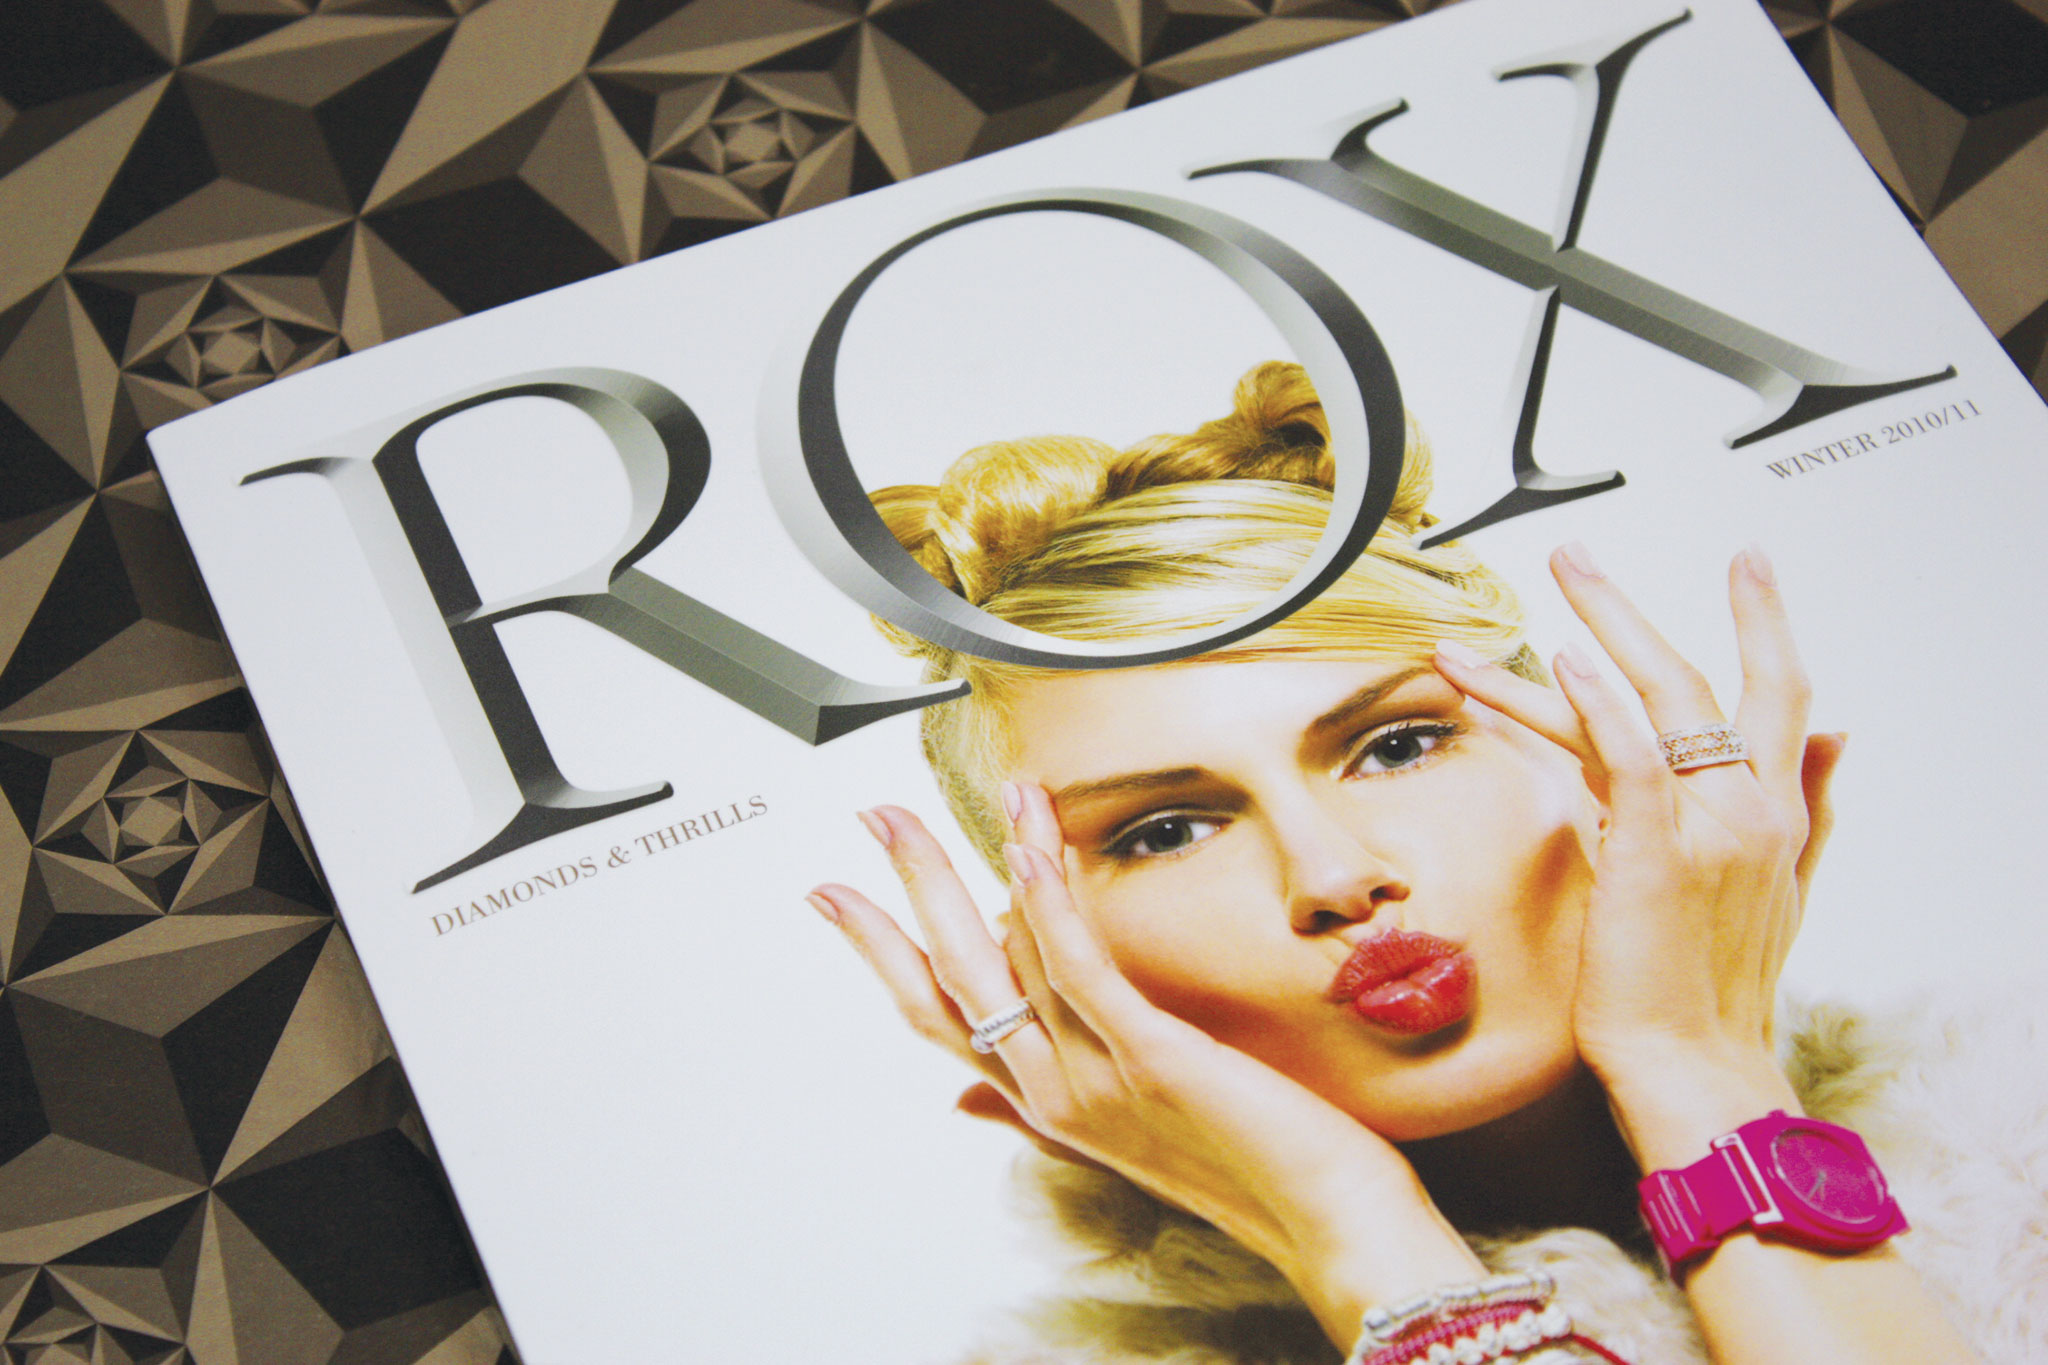 ROX visual brand